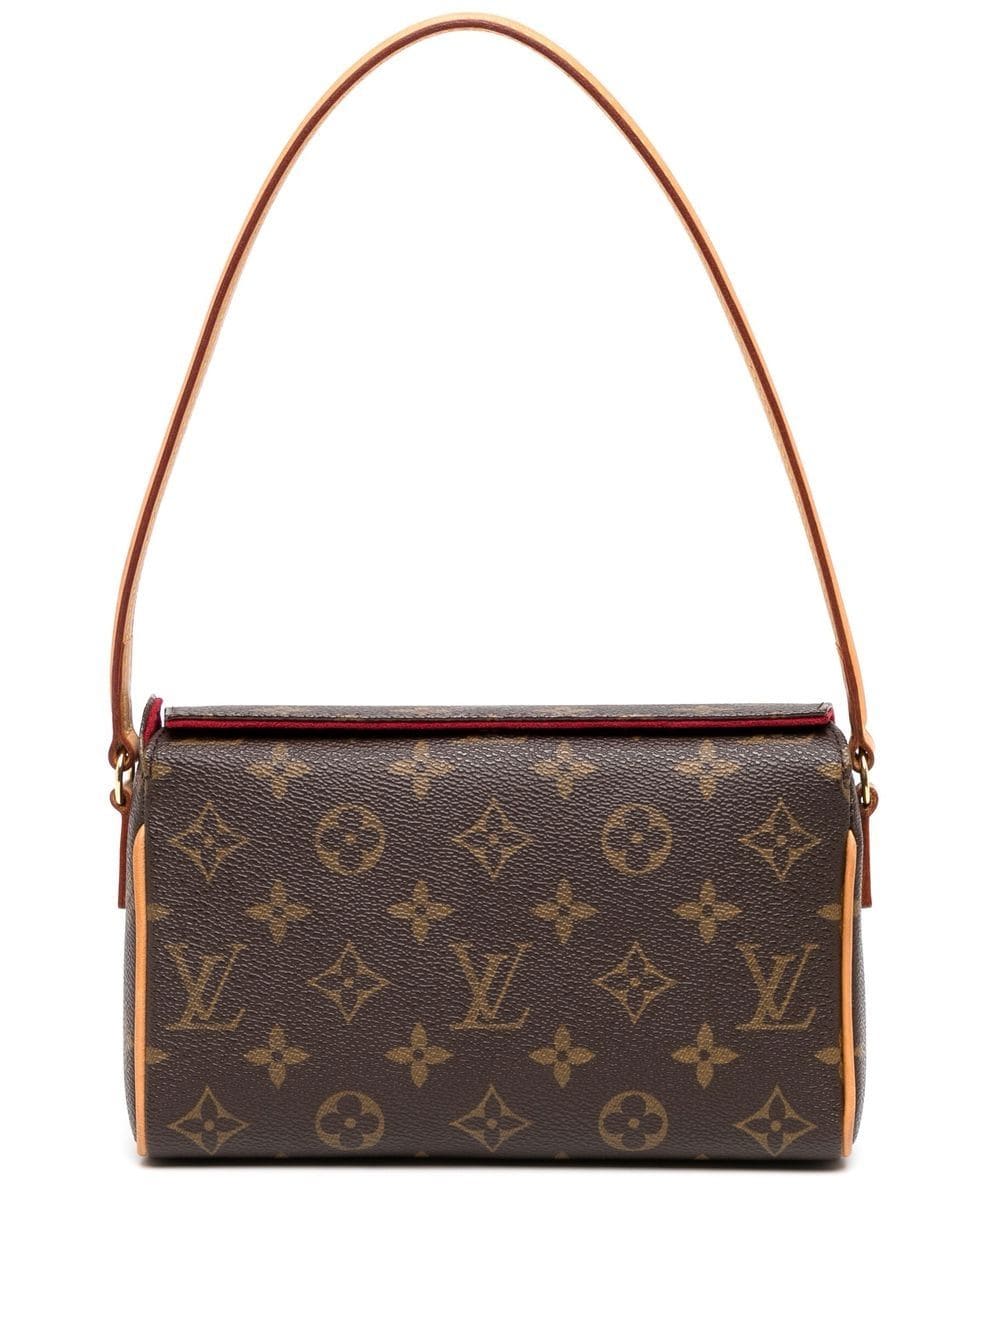 Louis Vuitton 2004 pre-owned Recital Handbag - Farfetch